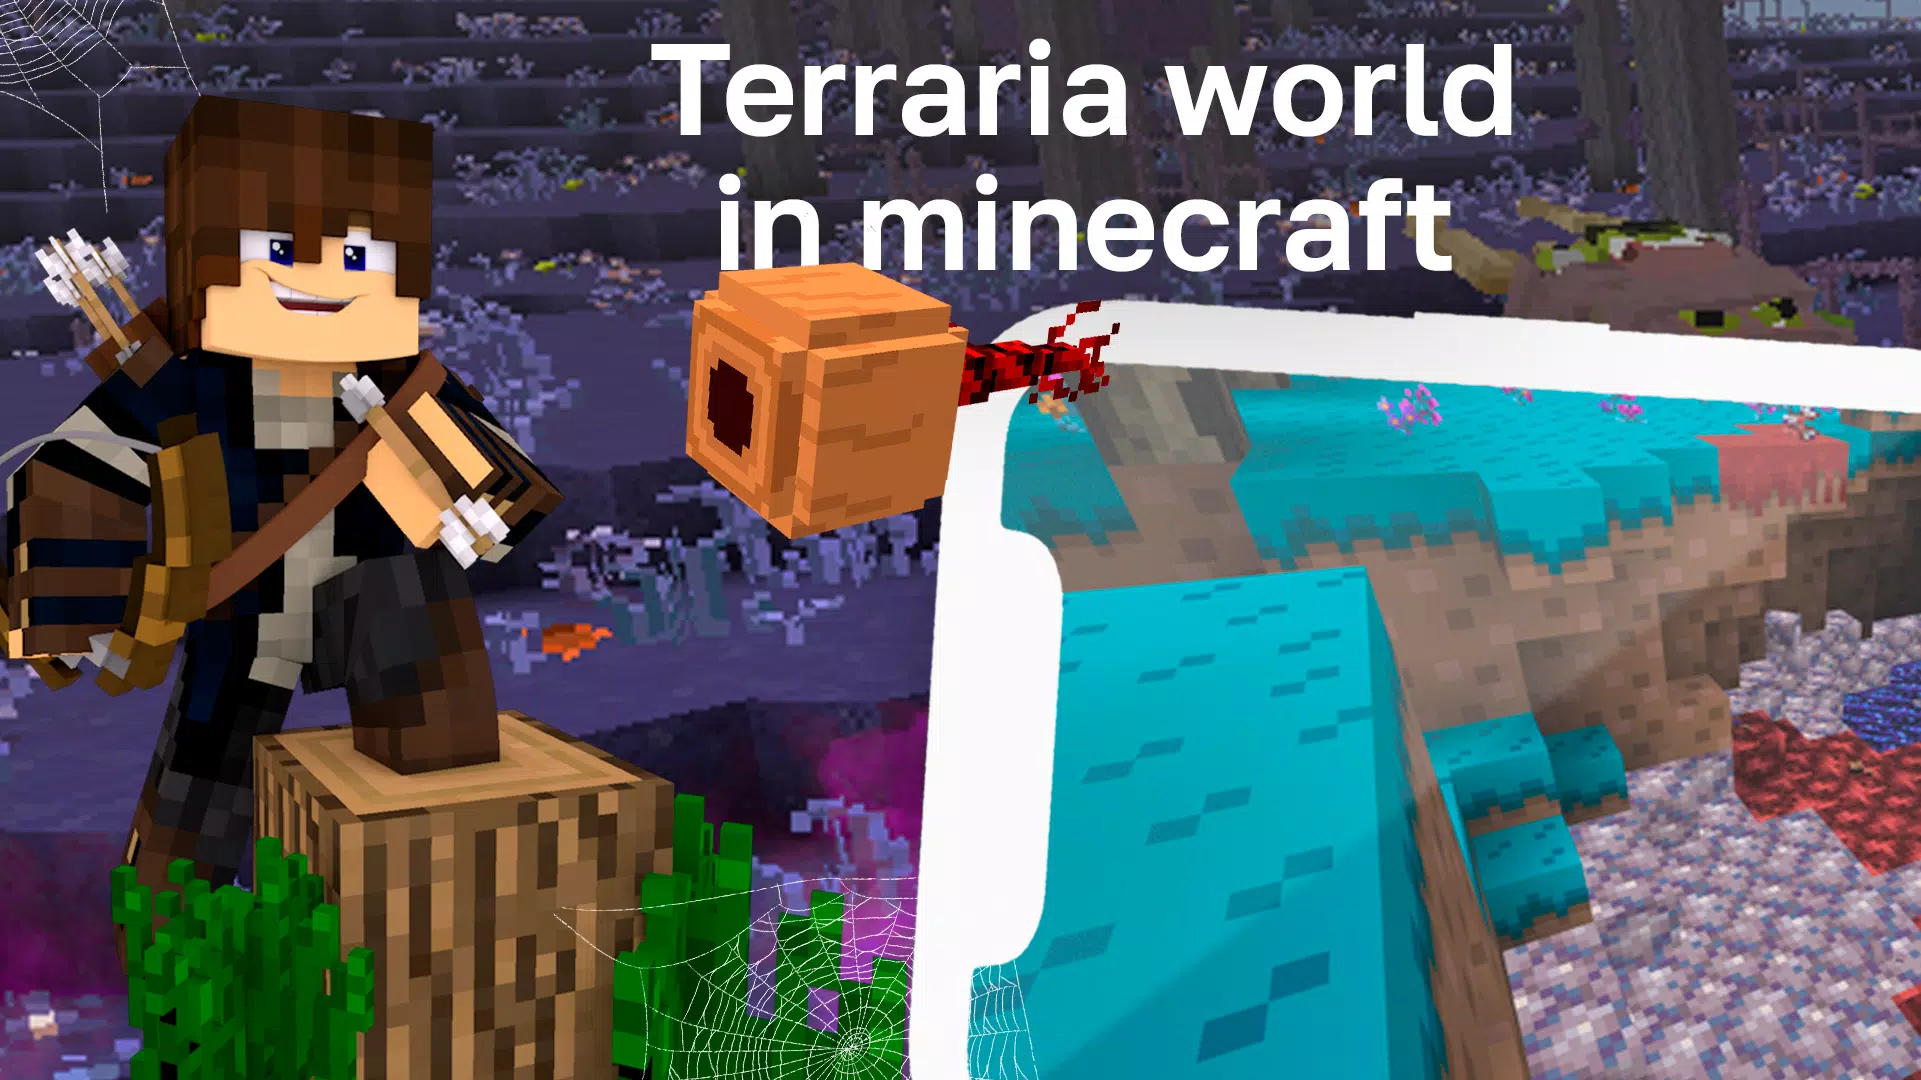 Download Game Terraria APK + MOD 2022